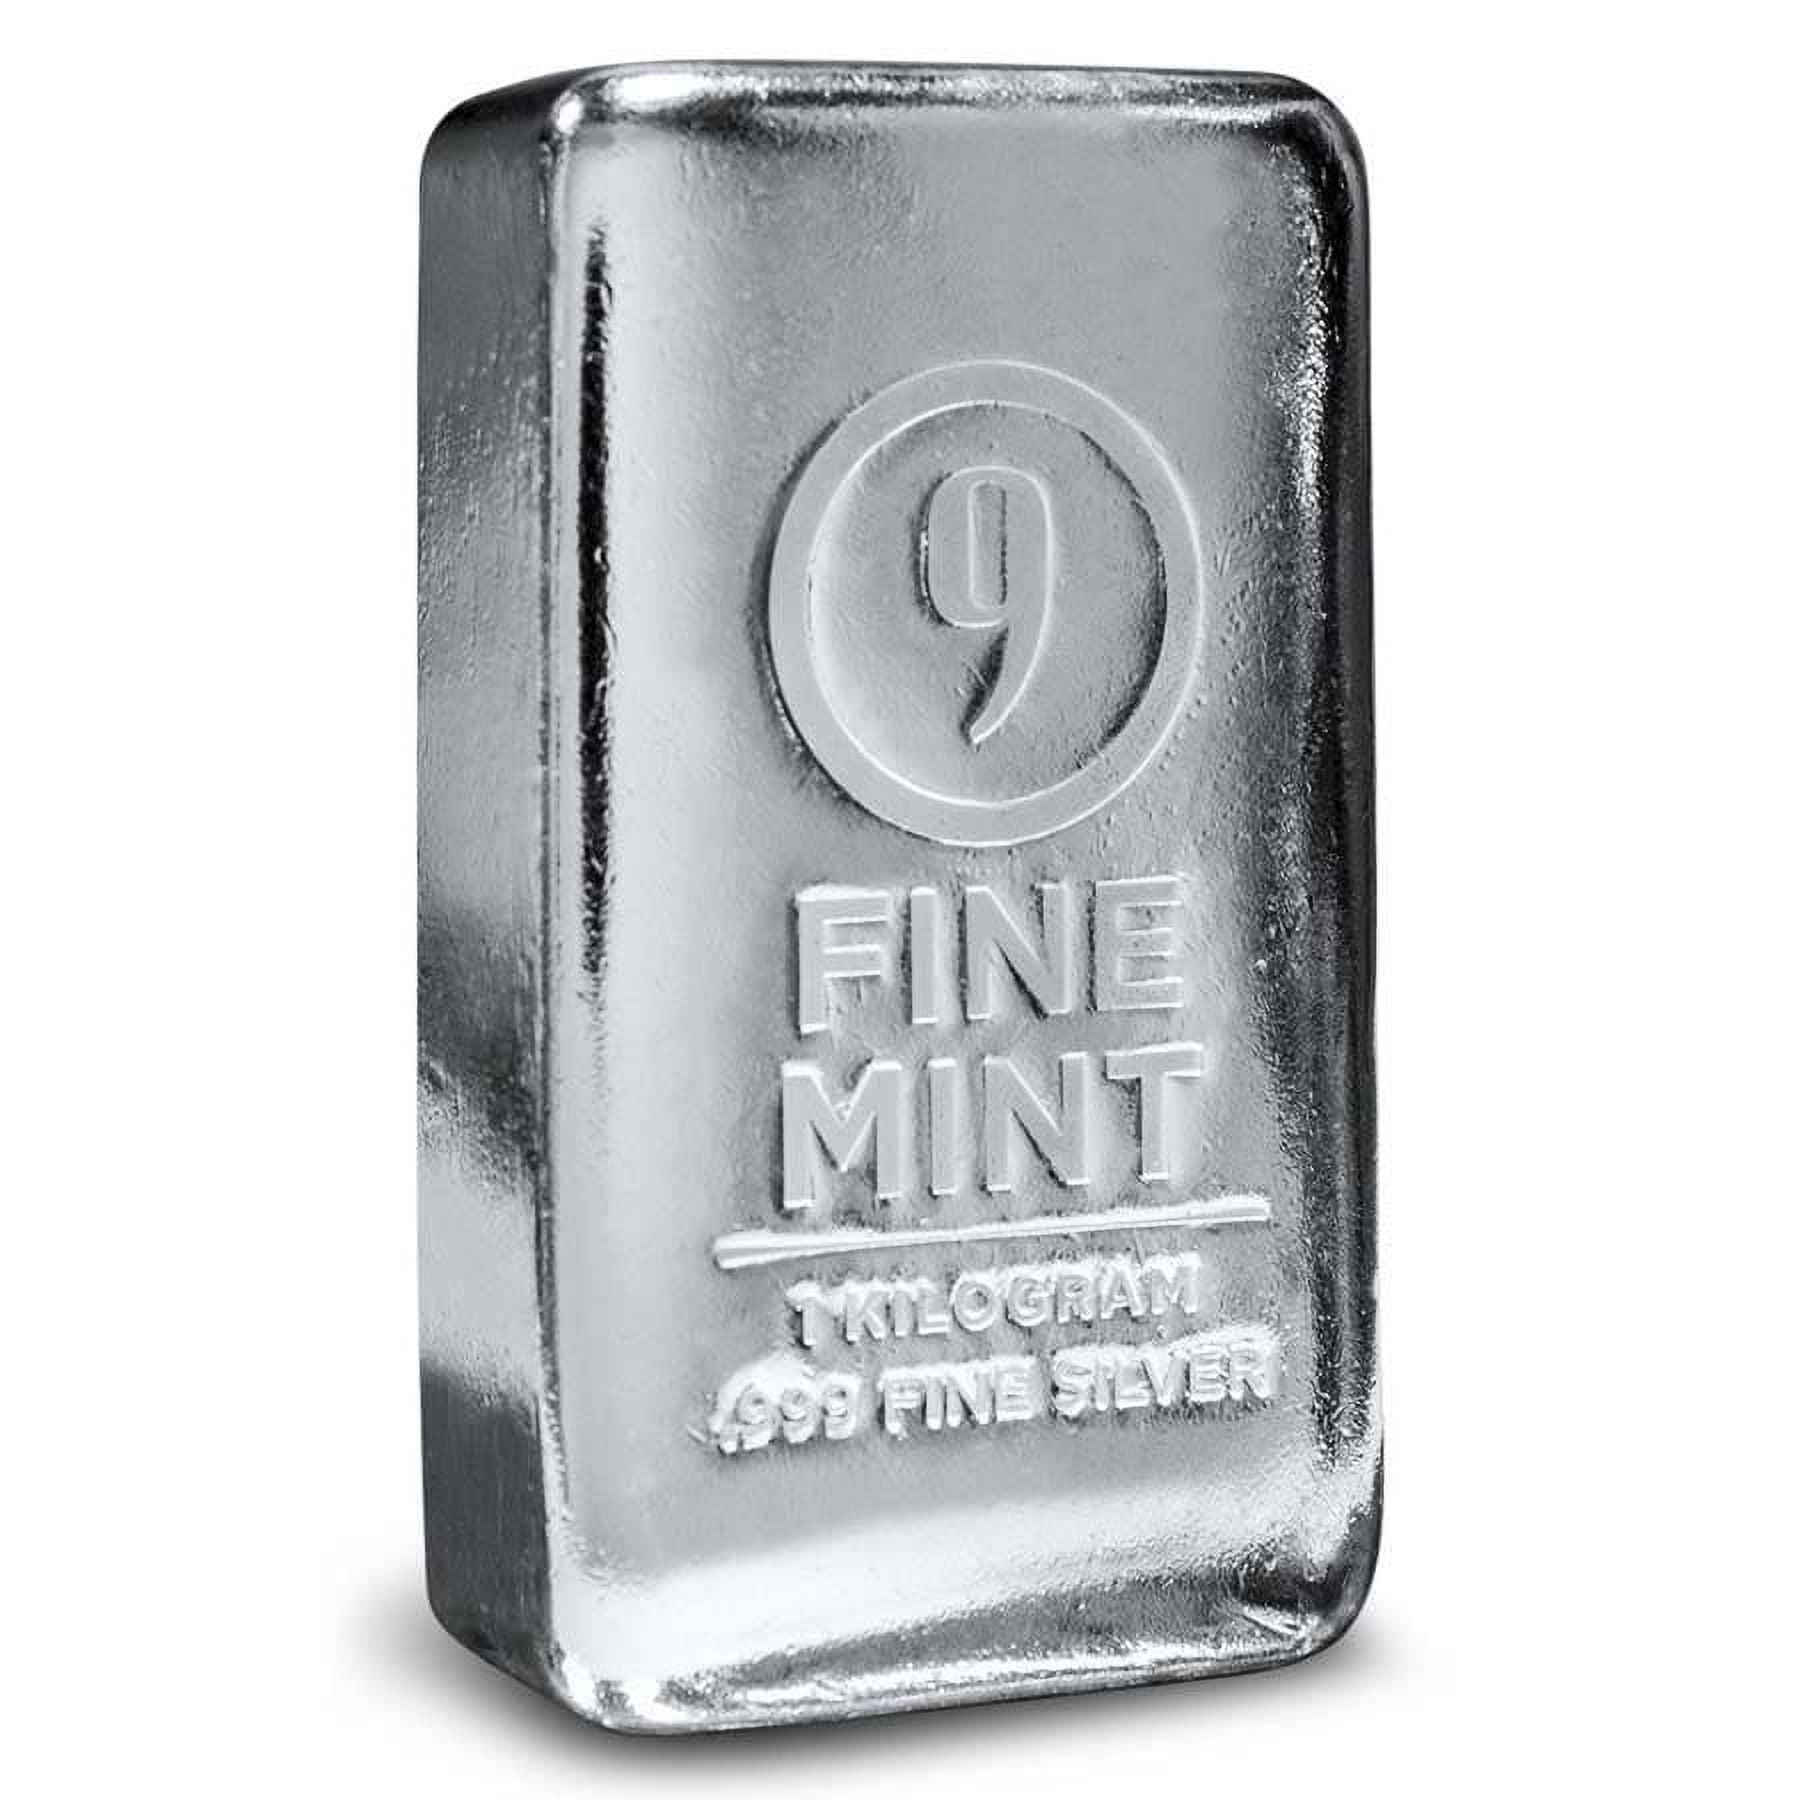 1 kilo Cast-Poured Silver Bar - 9Fine Mint - Walmart 